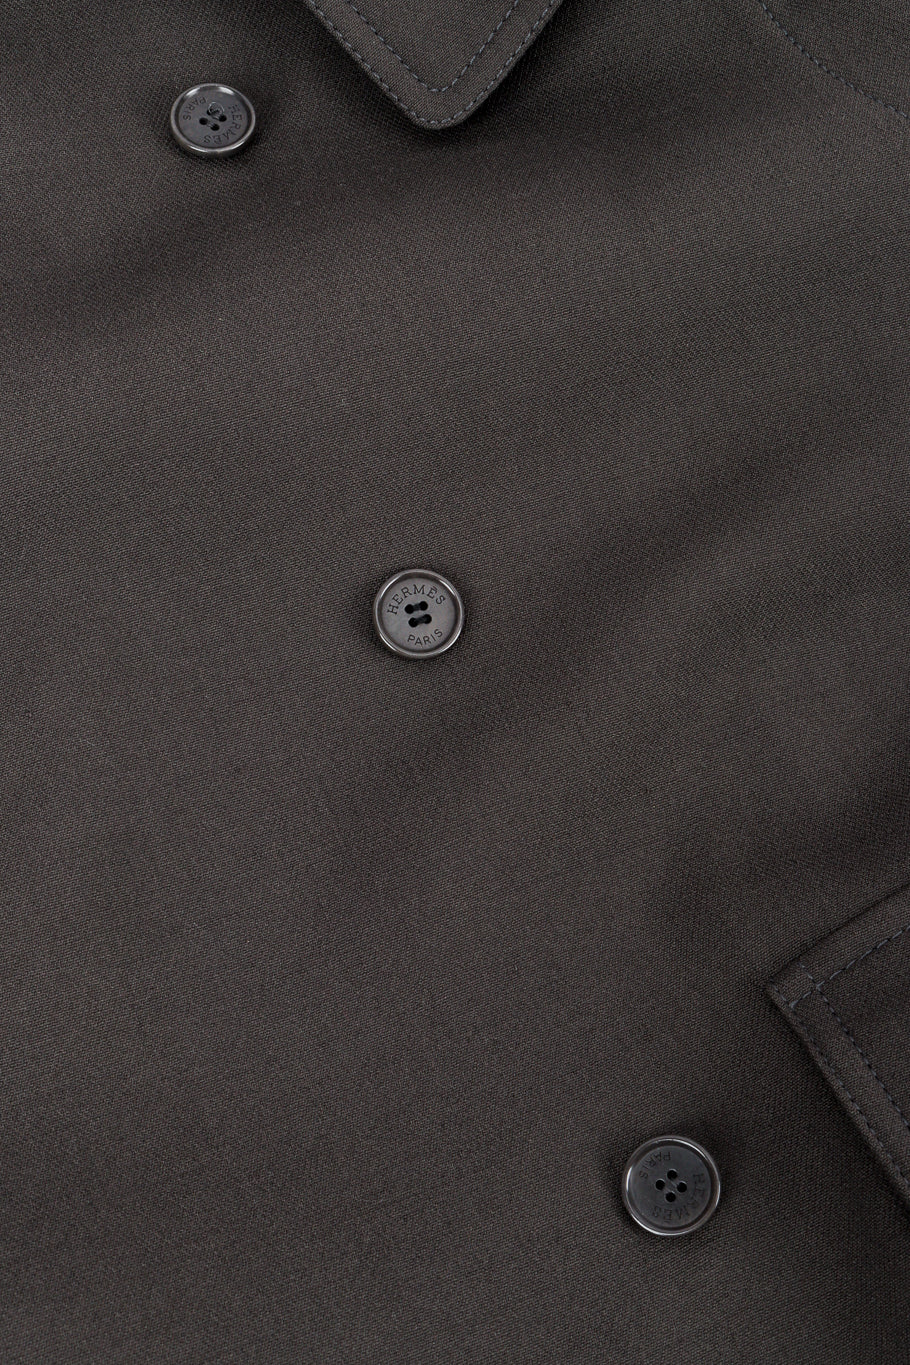 Vintage Hermés Wool Trench Coat button closeup @recess la